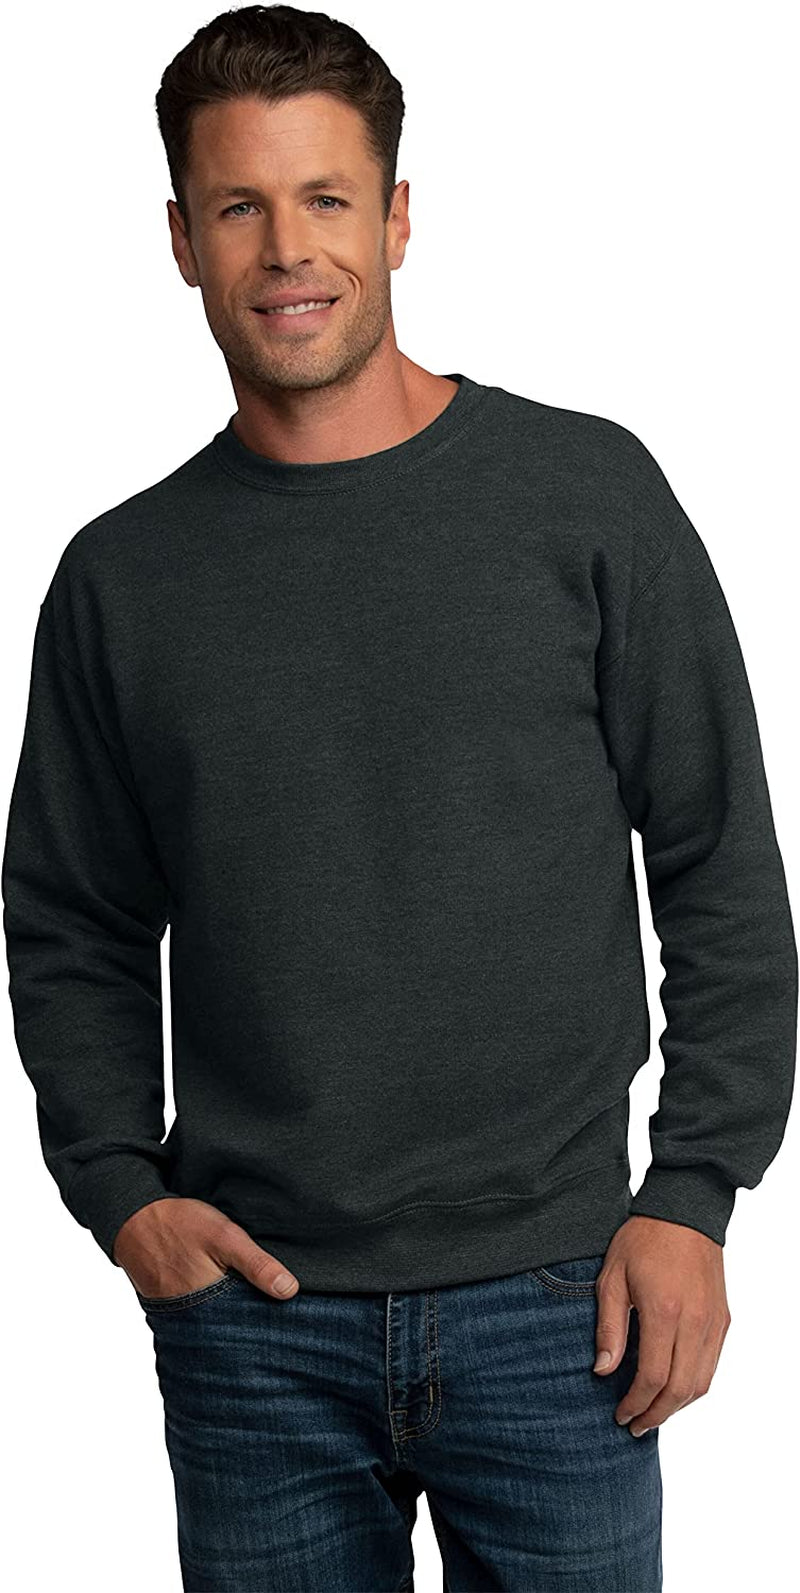 Men'S Eversoft Fleece Sweatshirts & Hoodies, Moisture Wicking & Breathable, Sizes S-4X